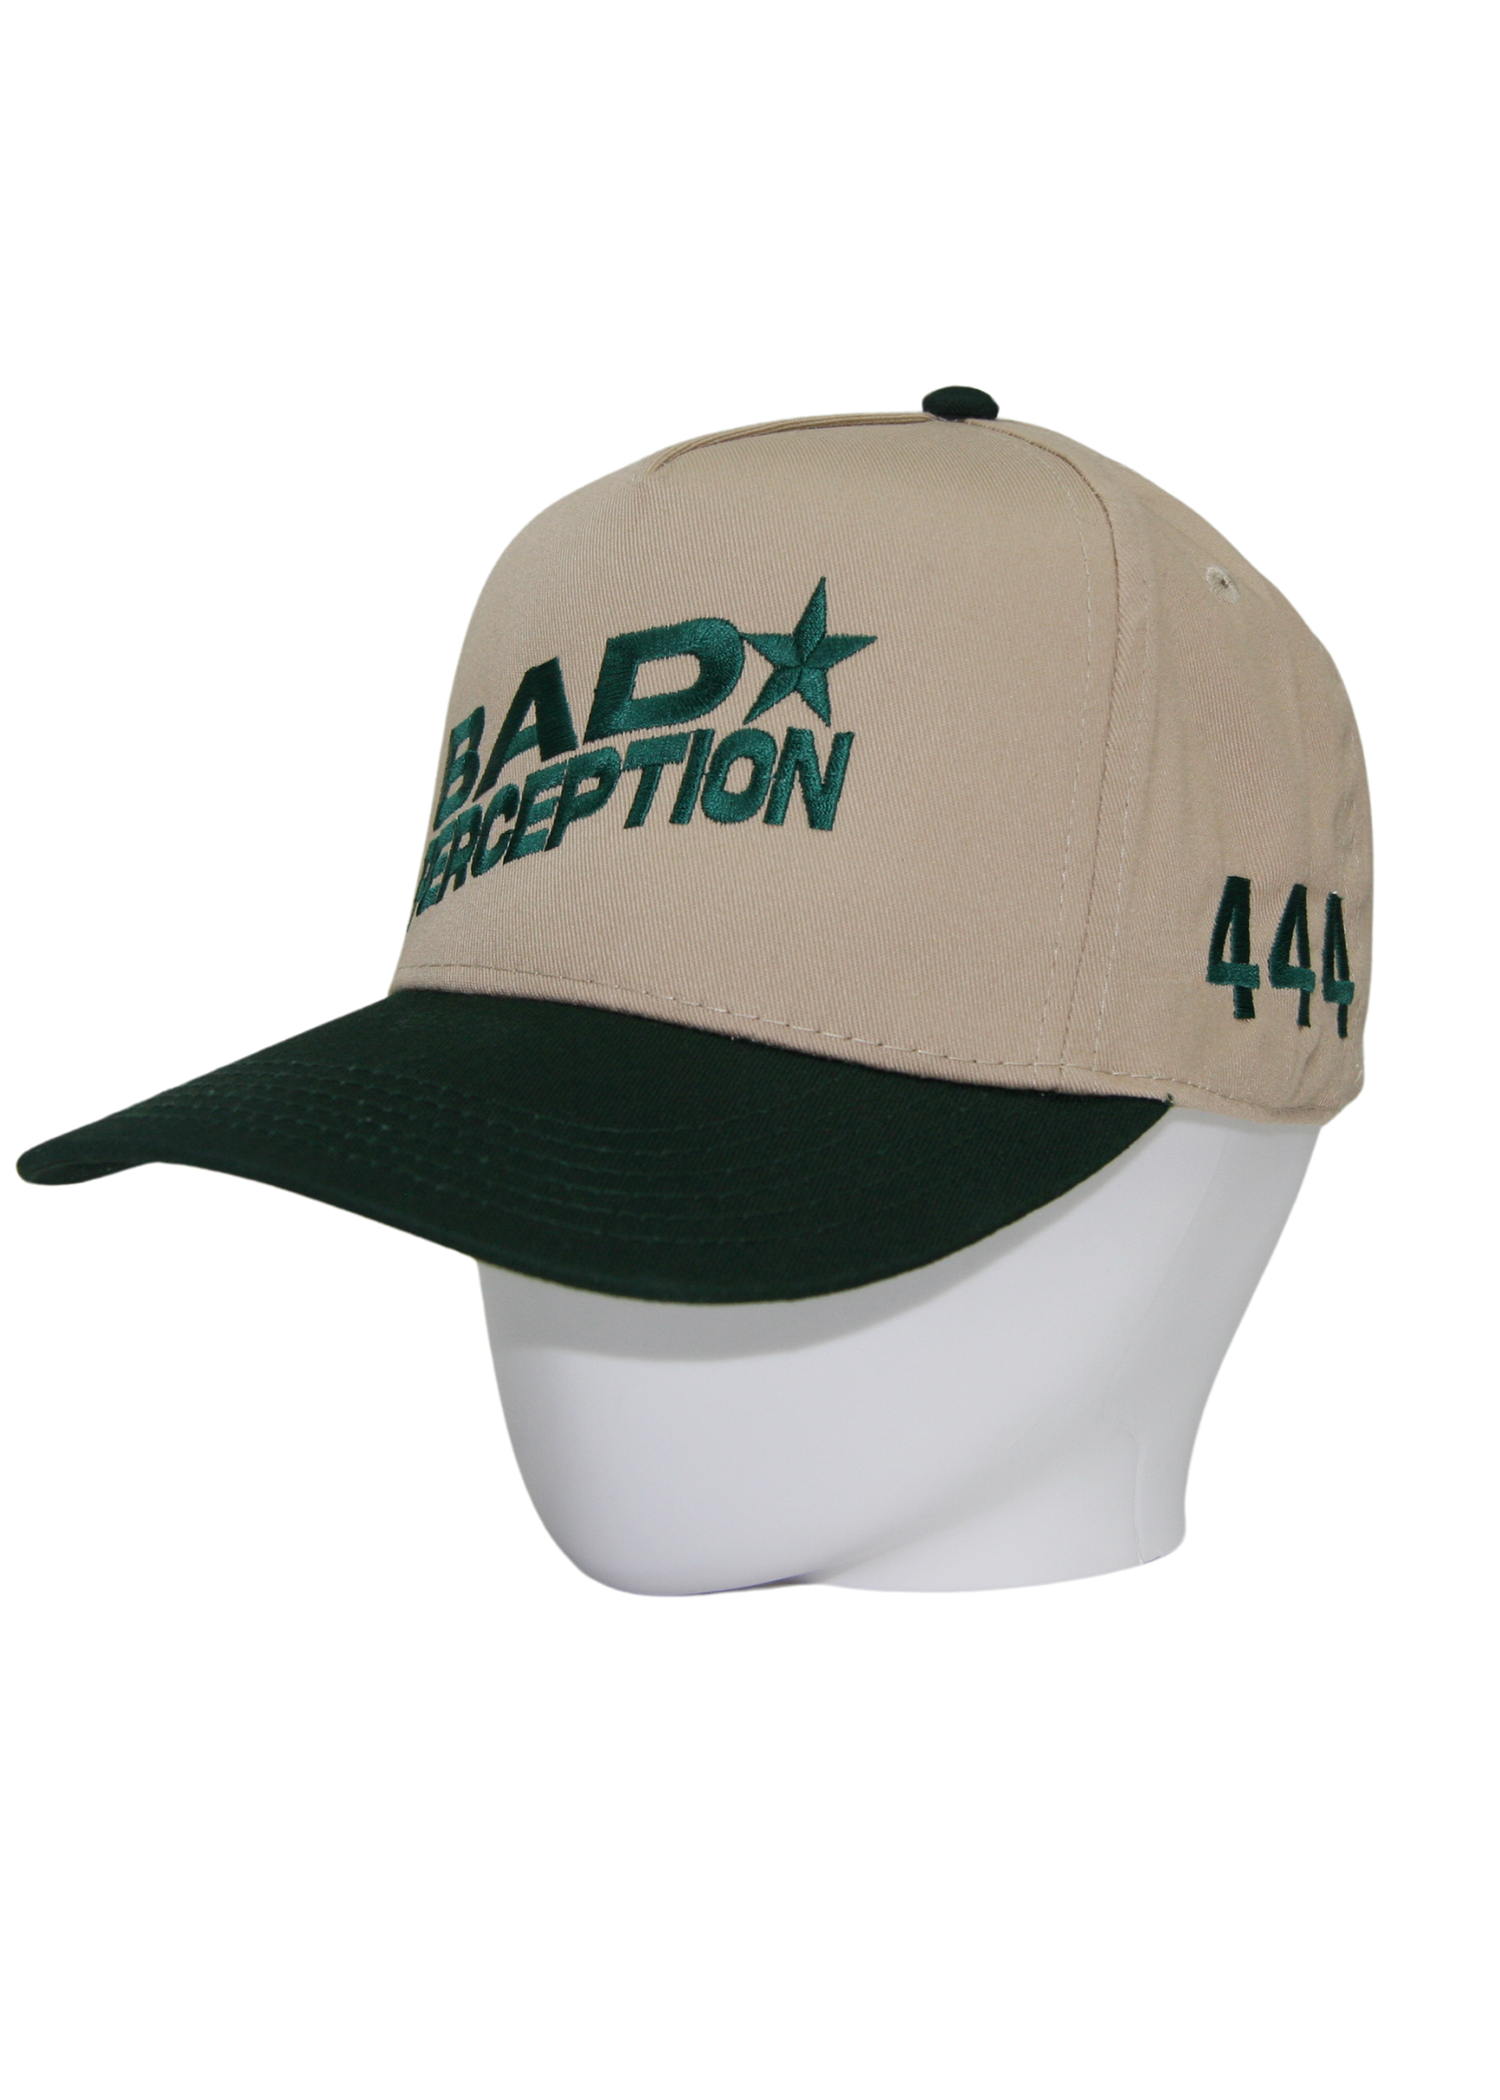 BAD PERCEPTION HAT